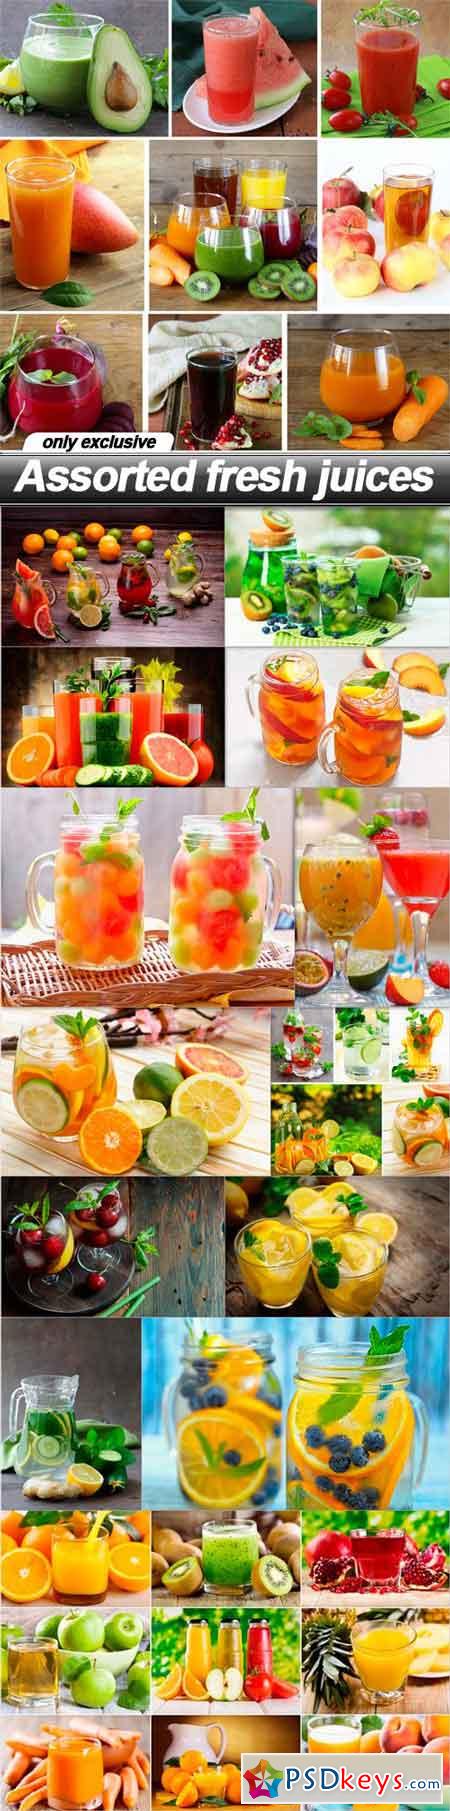 Assorted fresh juices - 14 UHQ JPEG